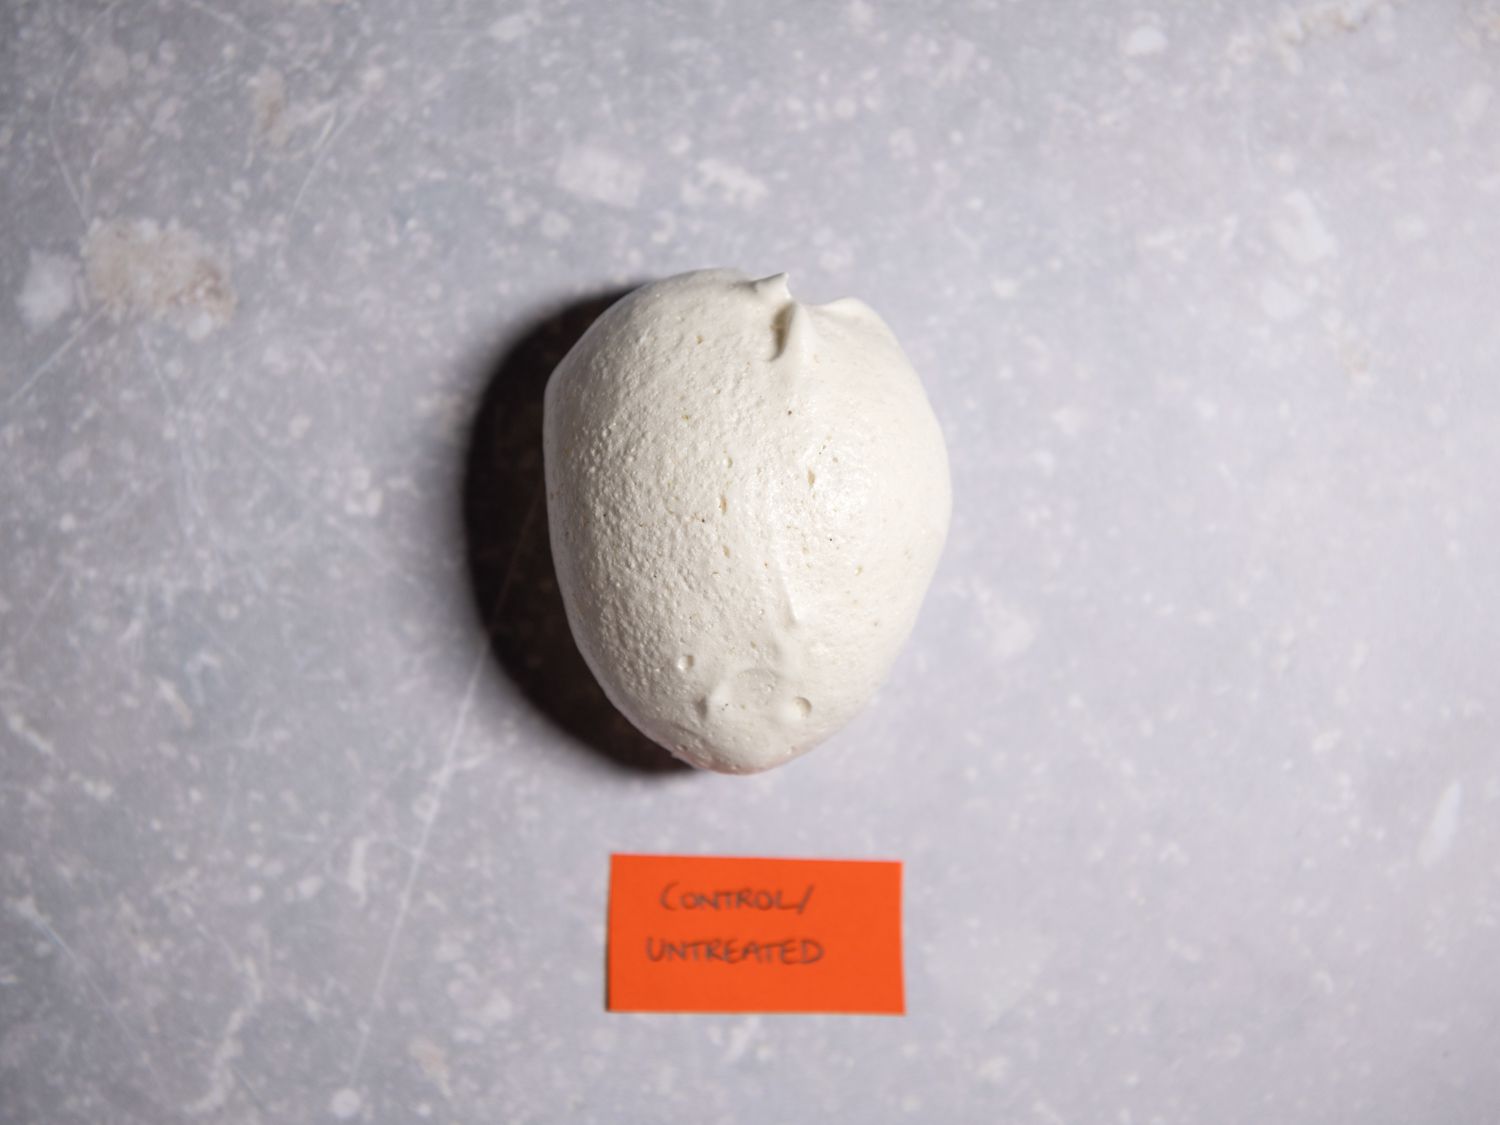 a test of plain aquafaba baked into a meringue